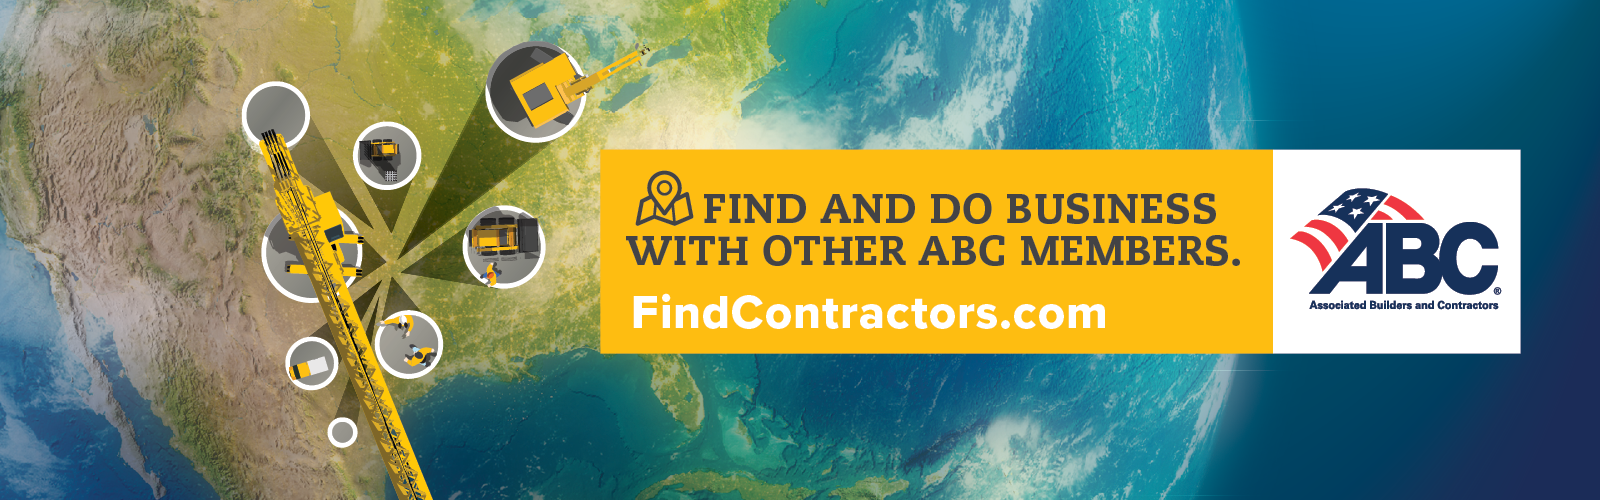 Find Contractors Banner (1600) new 2020637723388277953030